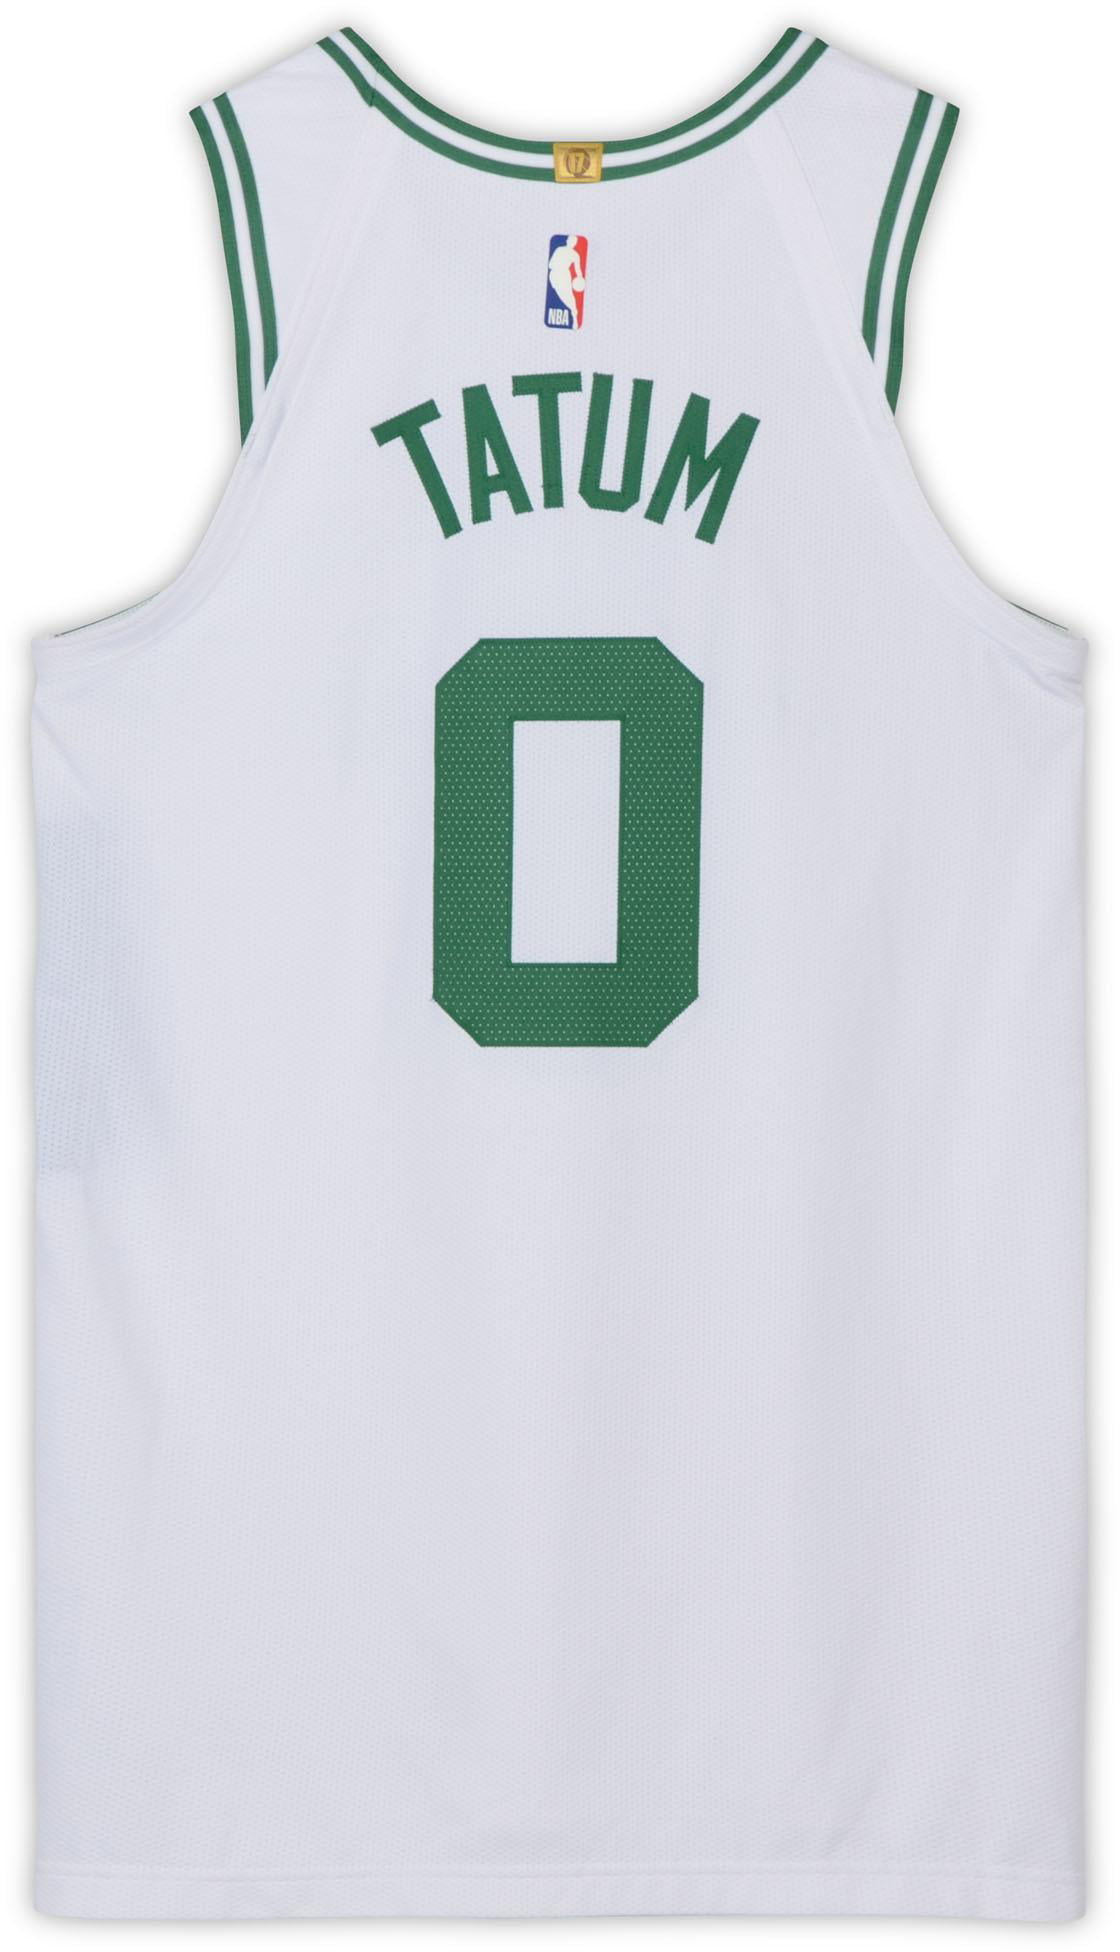 jayson tatum game worn jersey